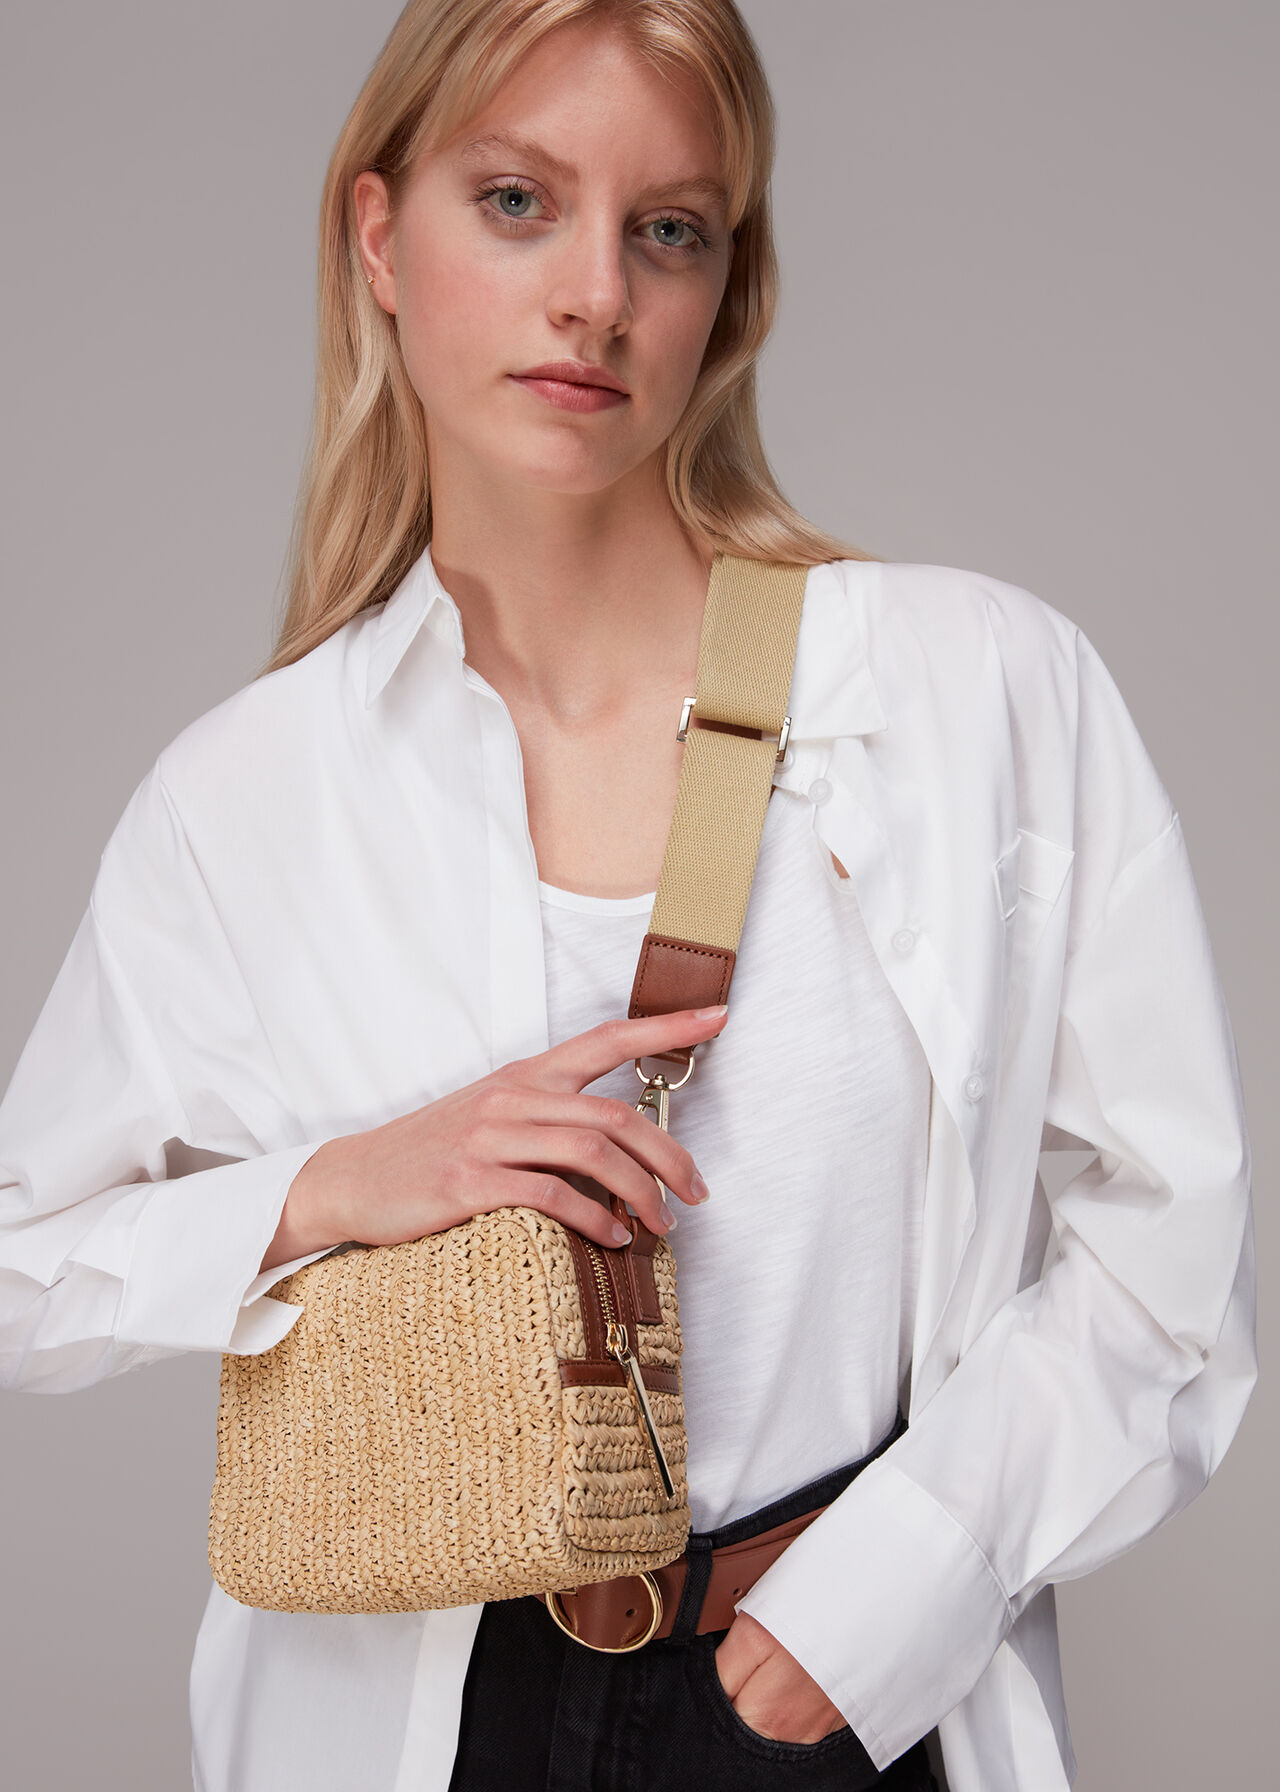 How To Make A Straw Crossbody Bag - Amber Fillerup Clark